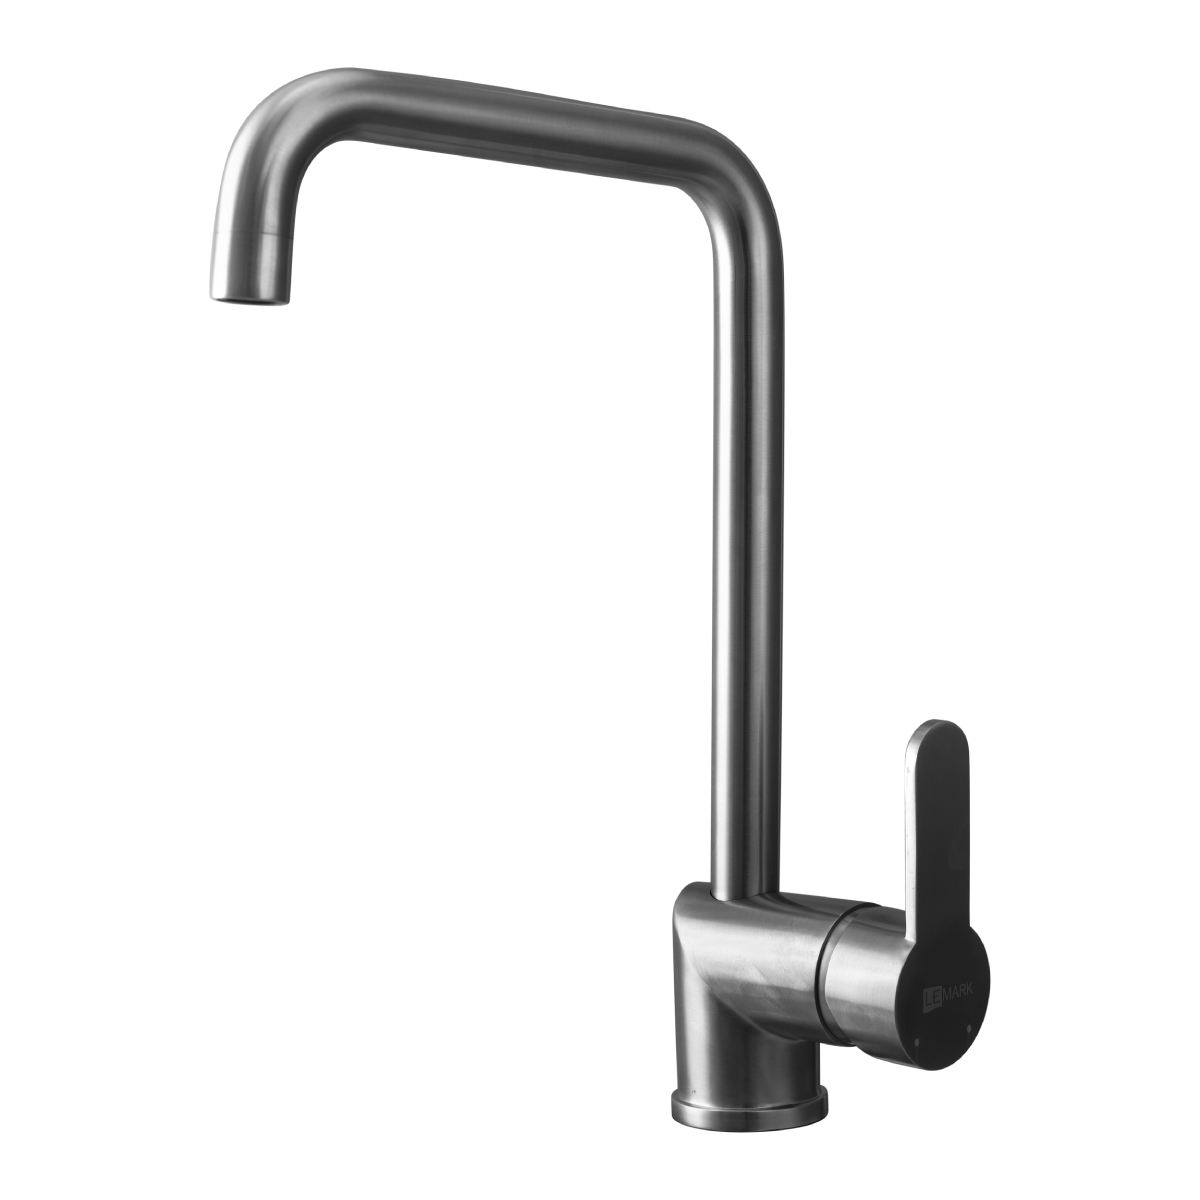 LM5073S Kitchen faucet
with swivel spout